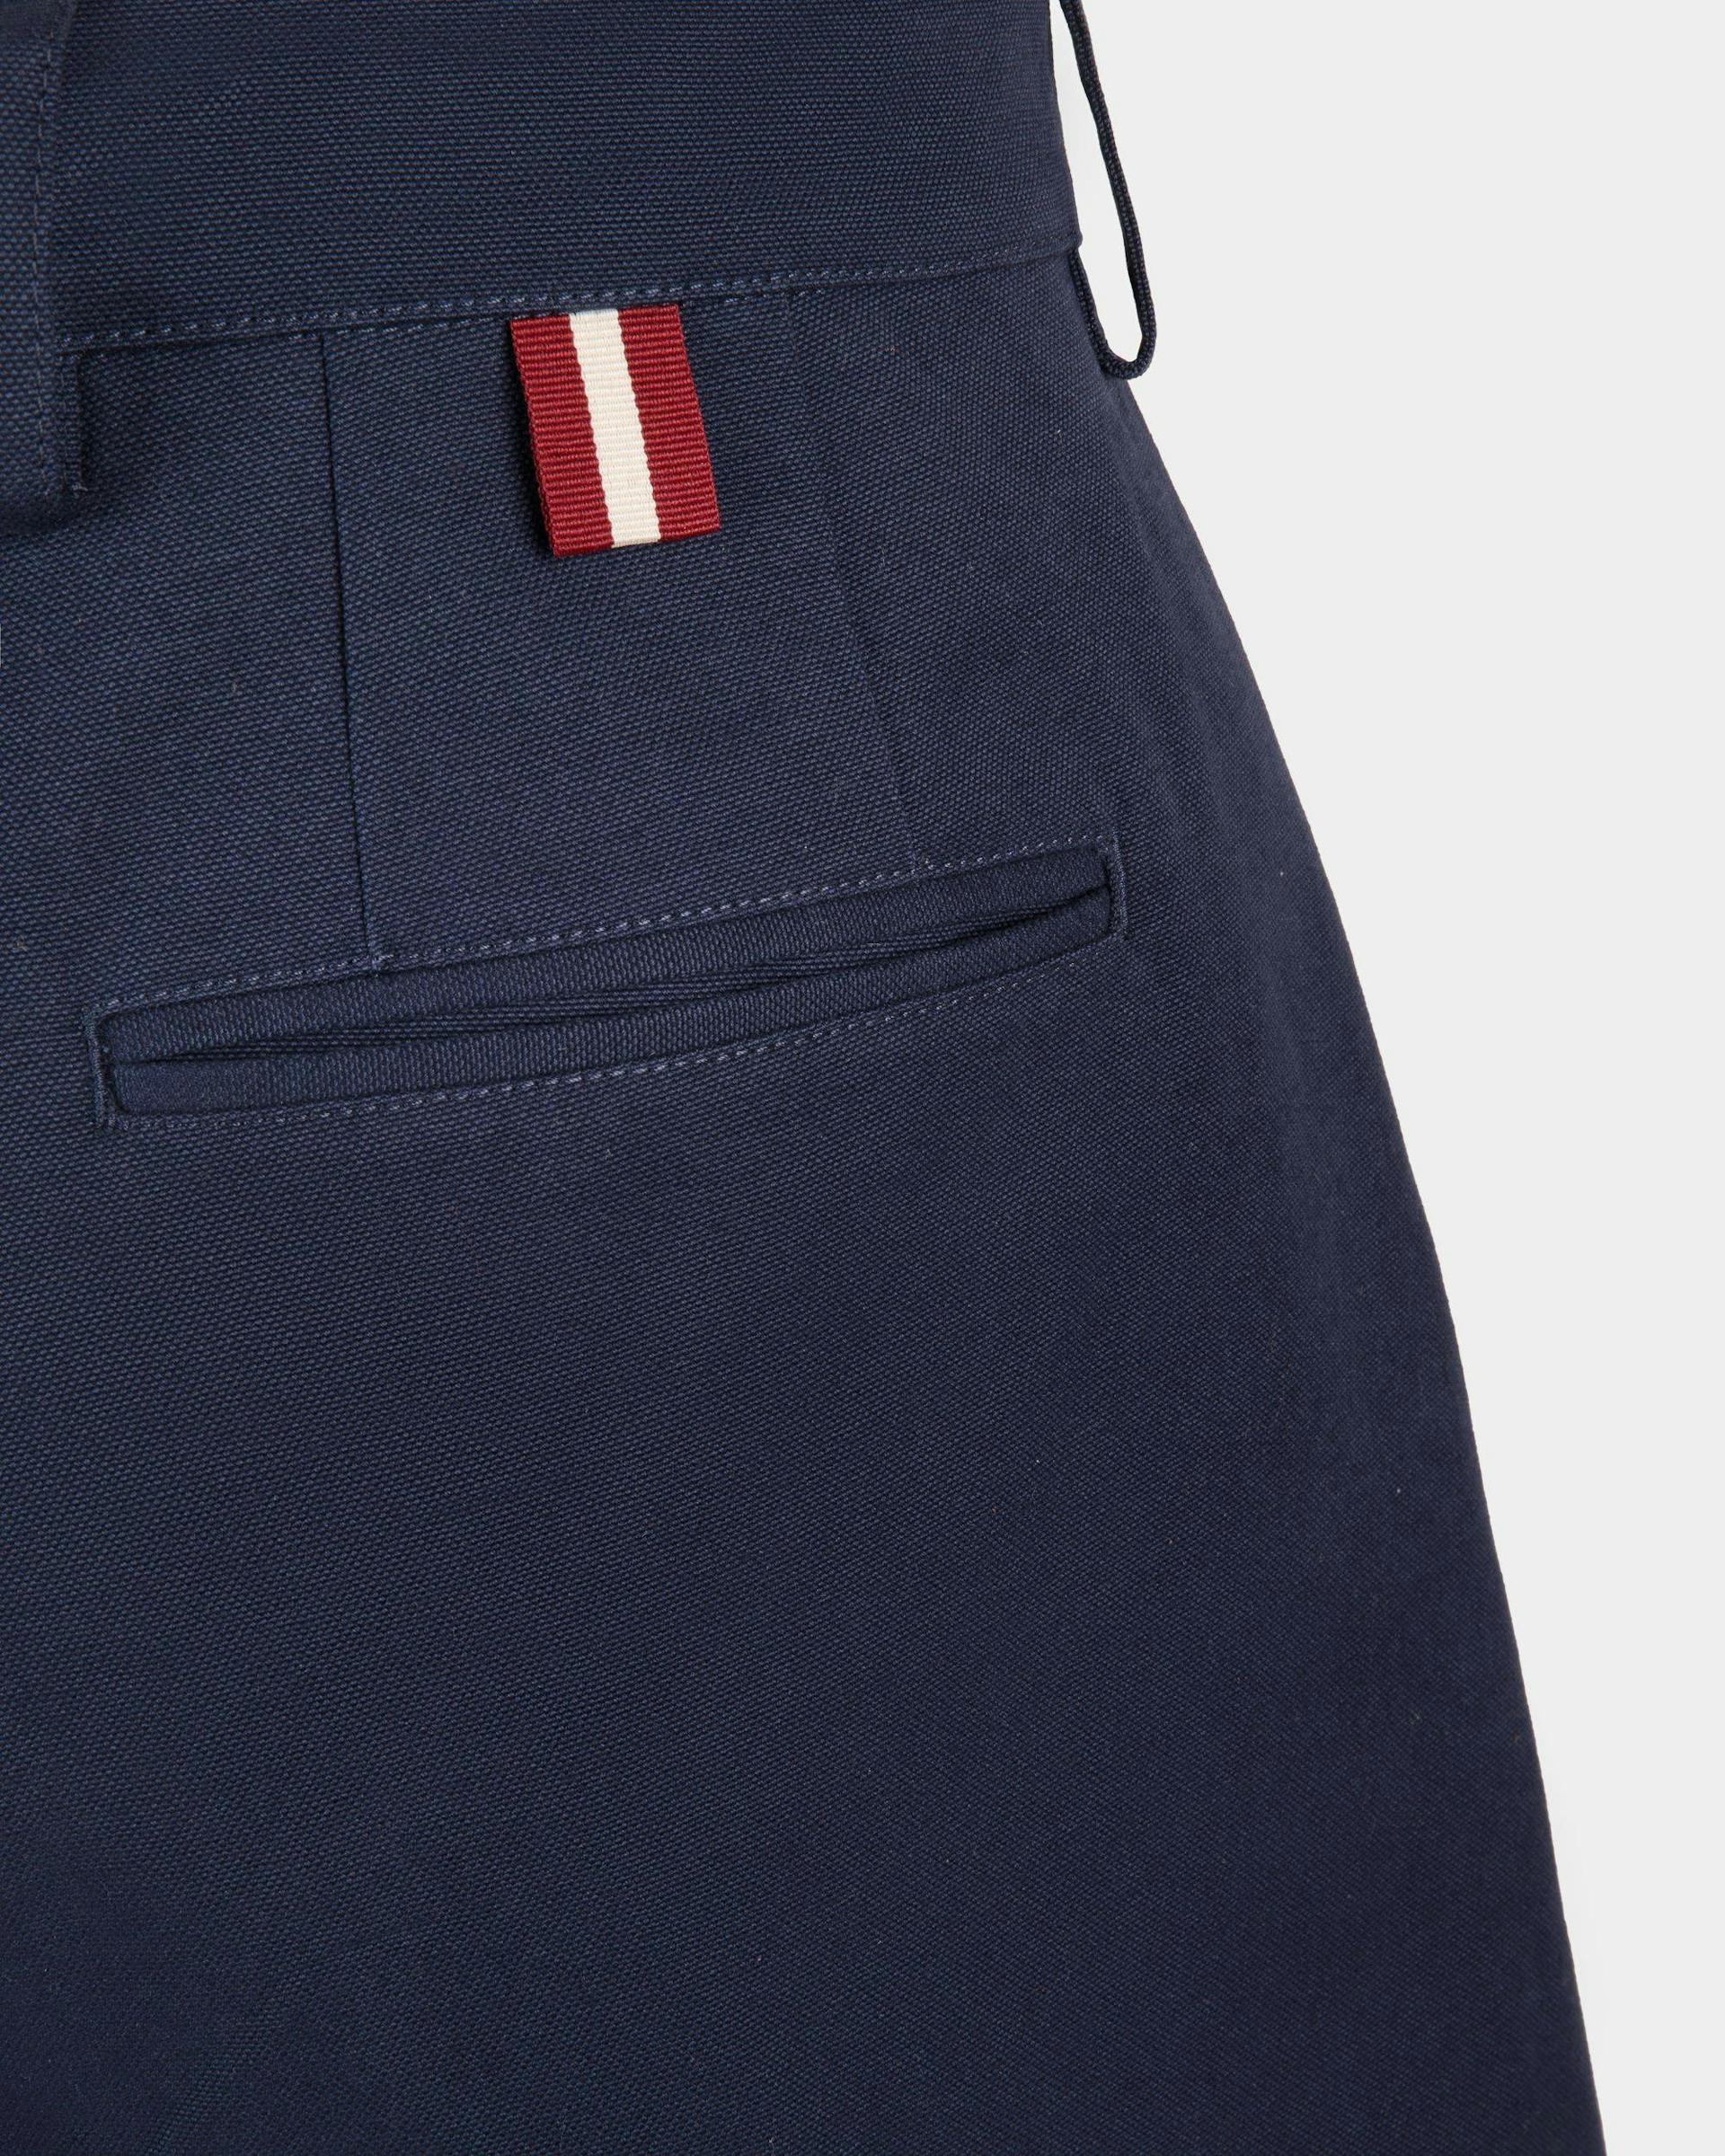 Men's Shorts in Navy Blue Cotton | Bally | On Model Detail